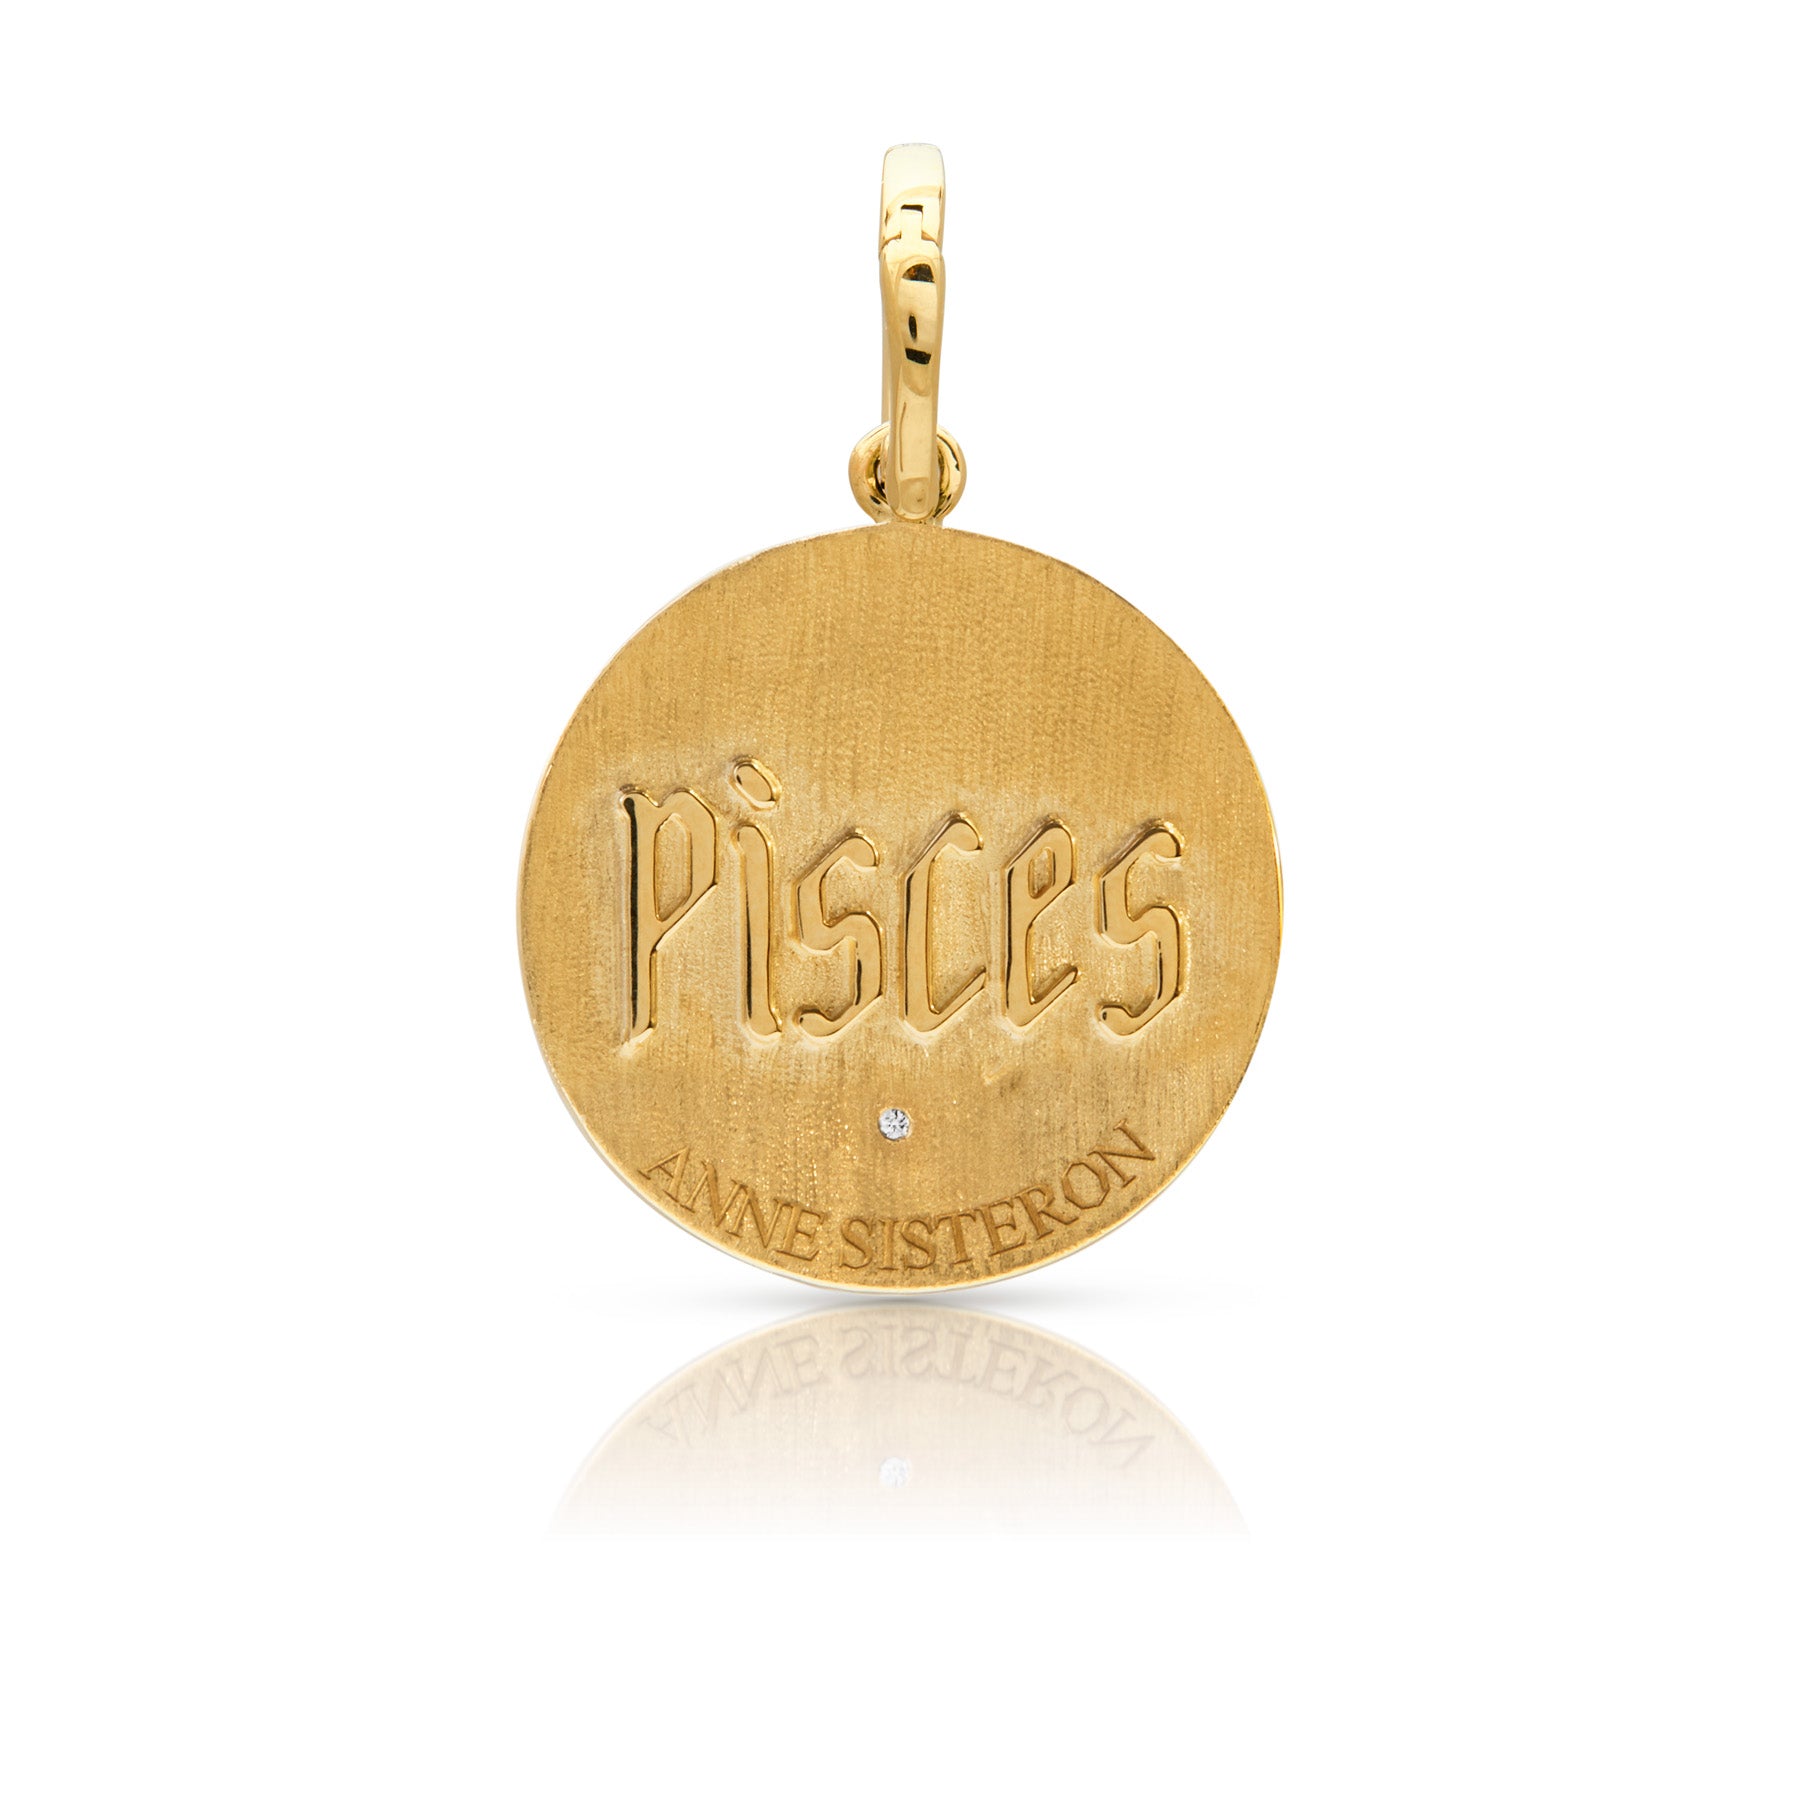 14KT Yellow Gold Diamond Zodiac Pisces Medallion Charm with Diamond Clip on Bail